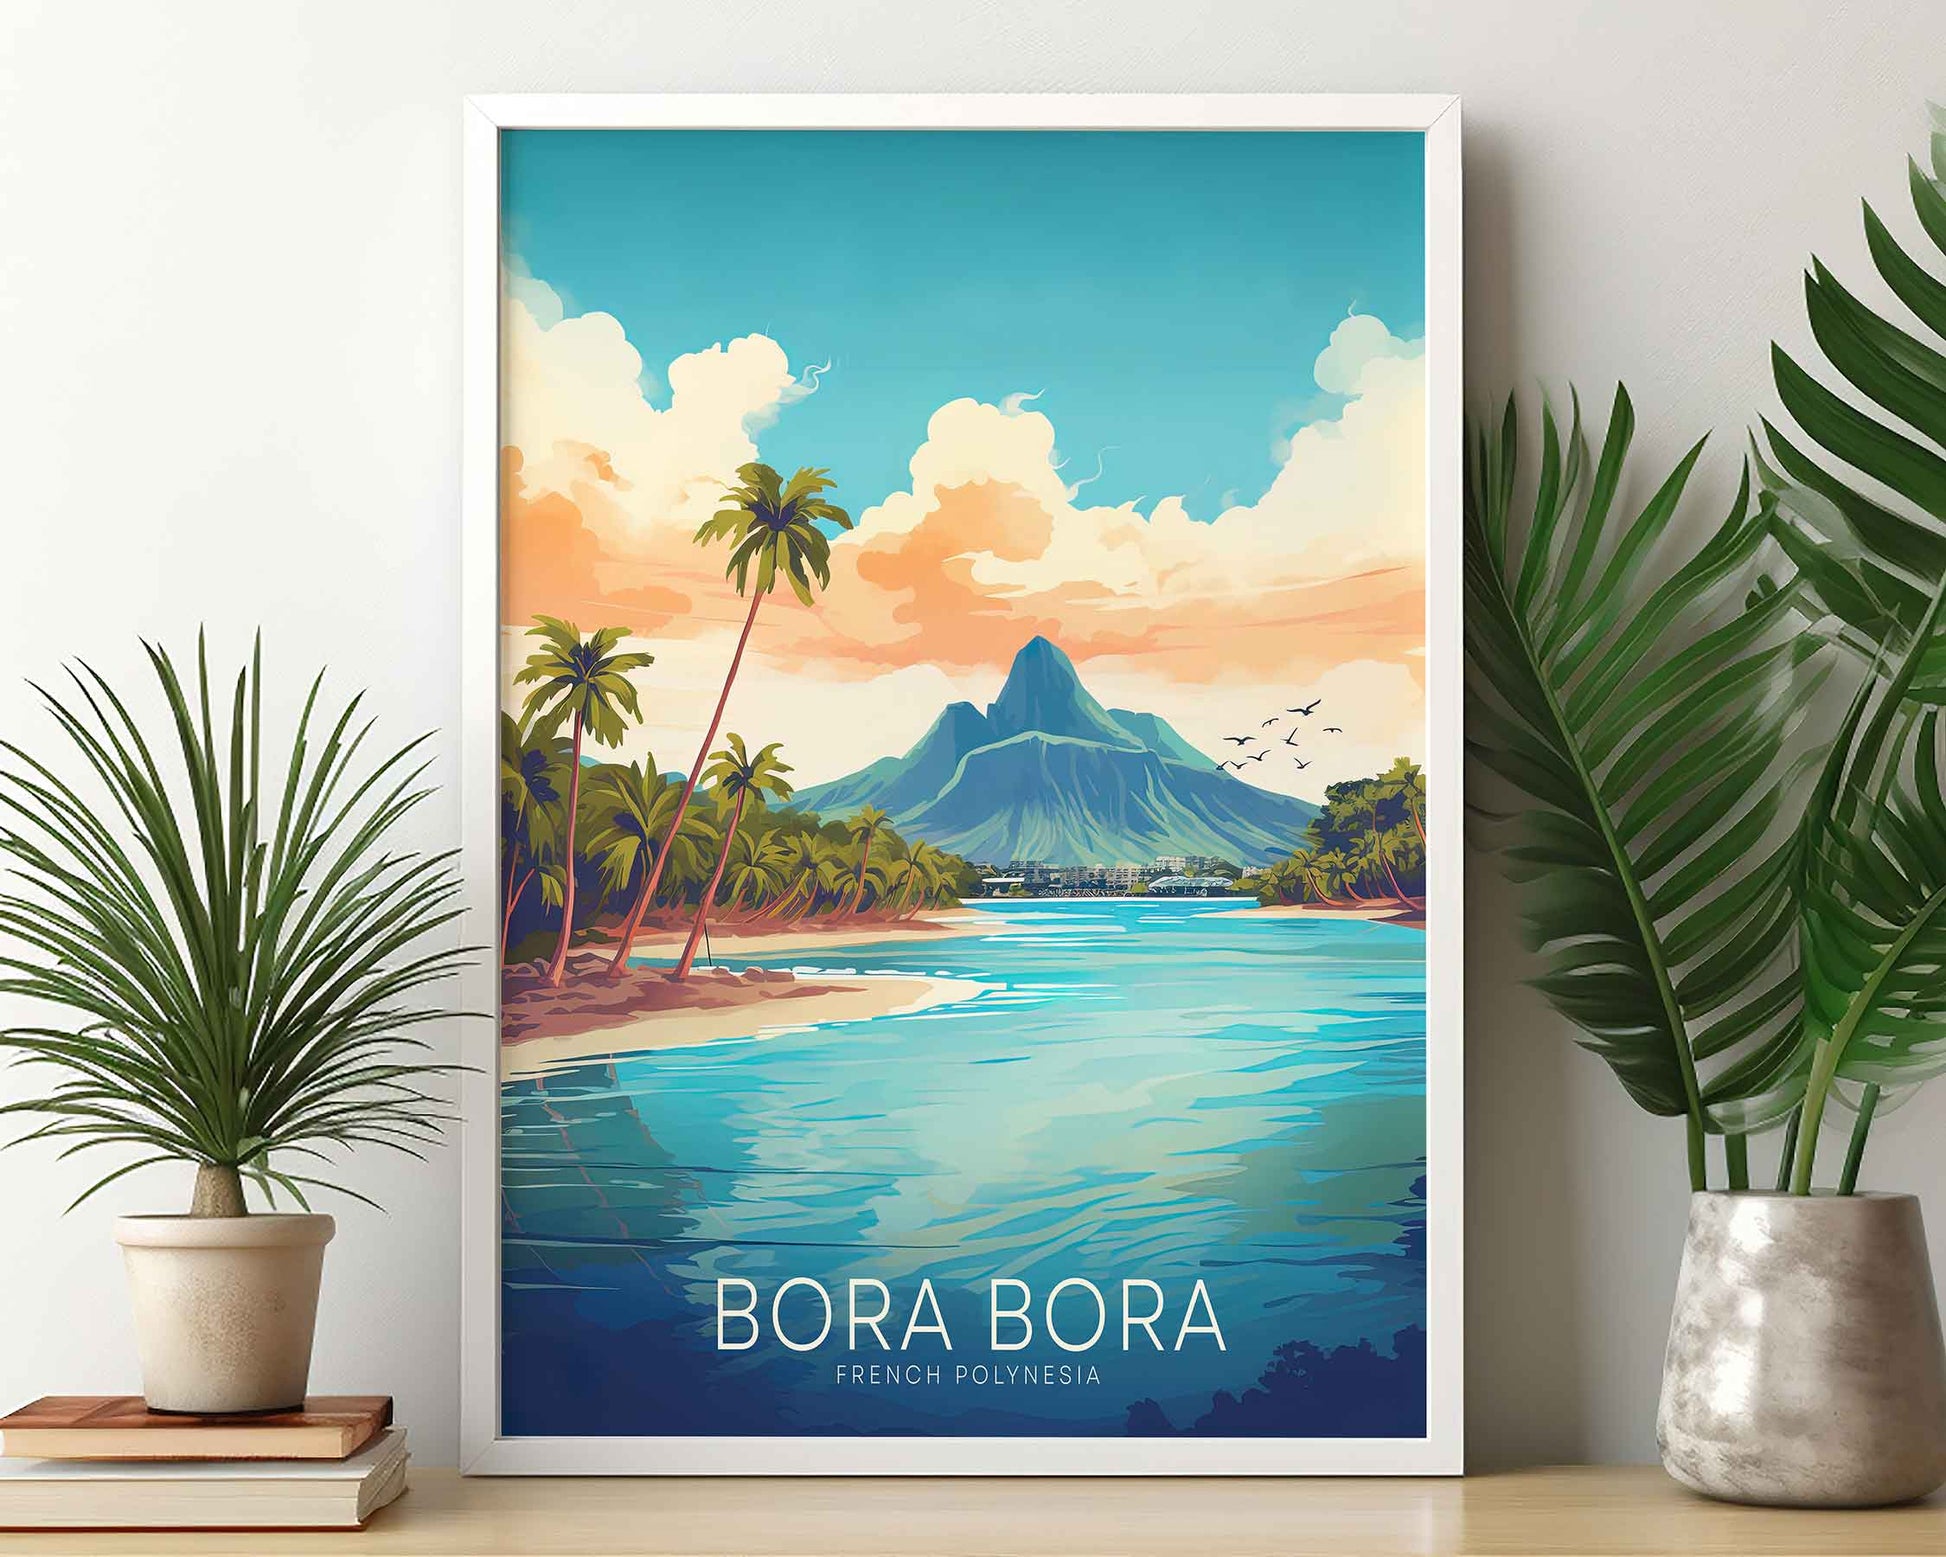 Framed Image of Bora Bora Wall Art Print Travel Posters Illustration